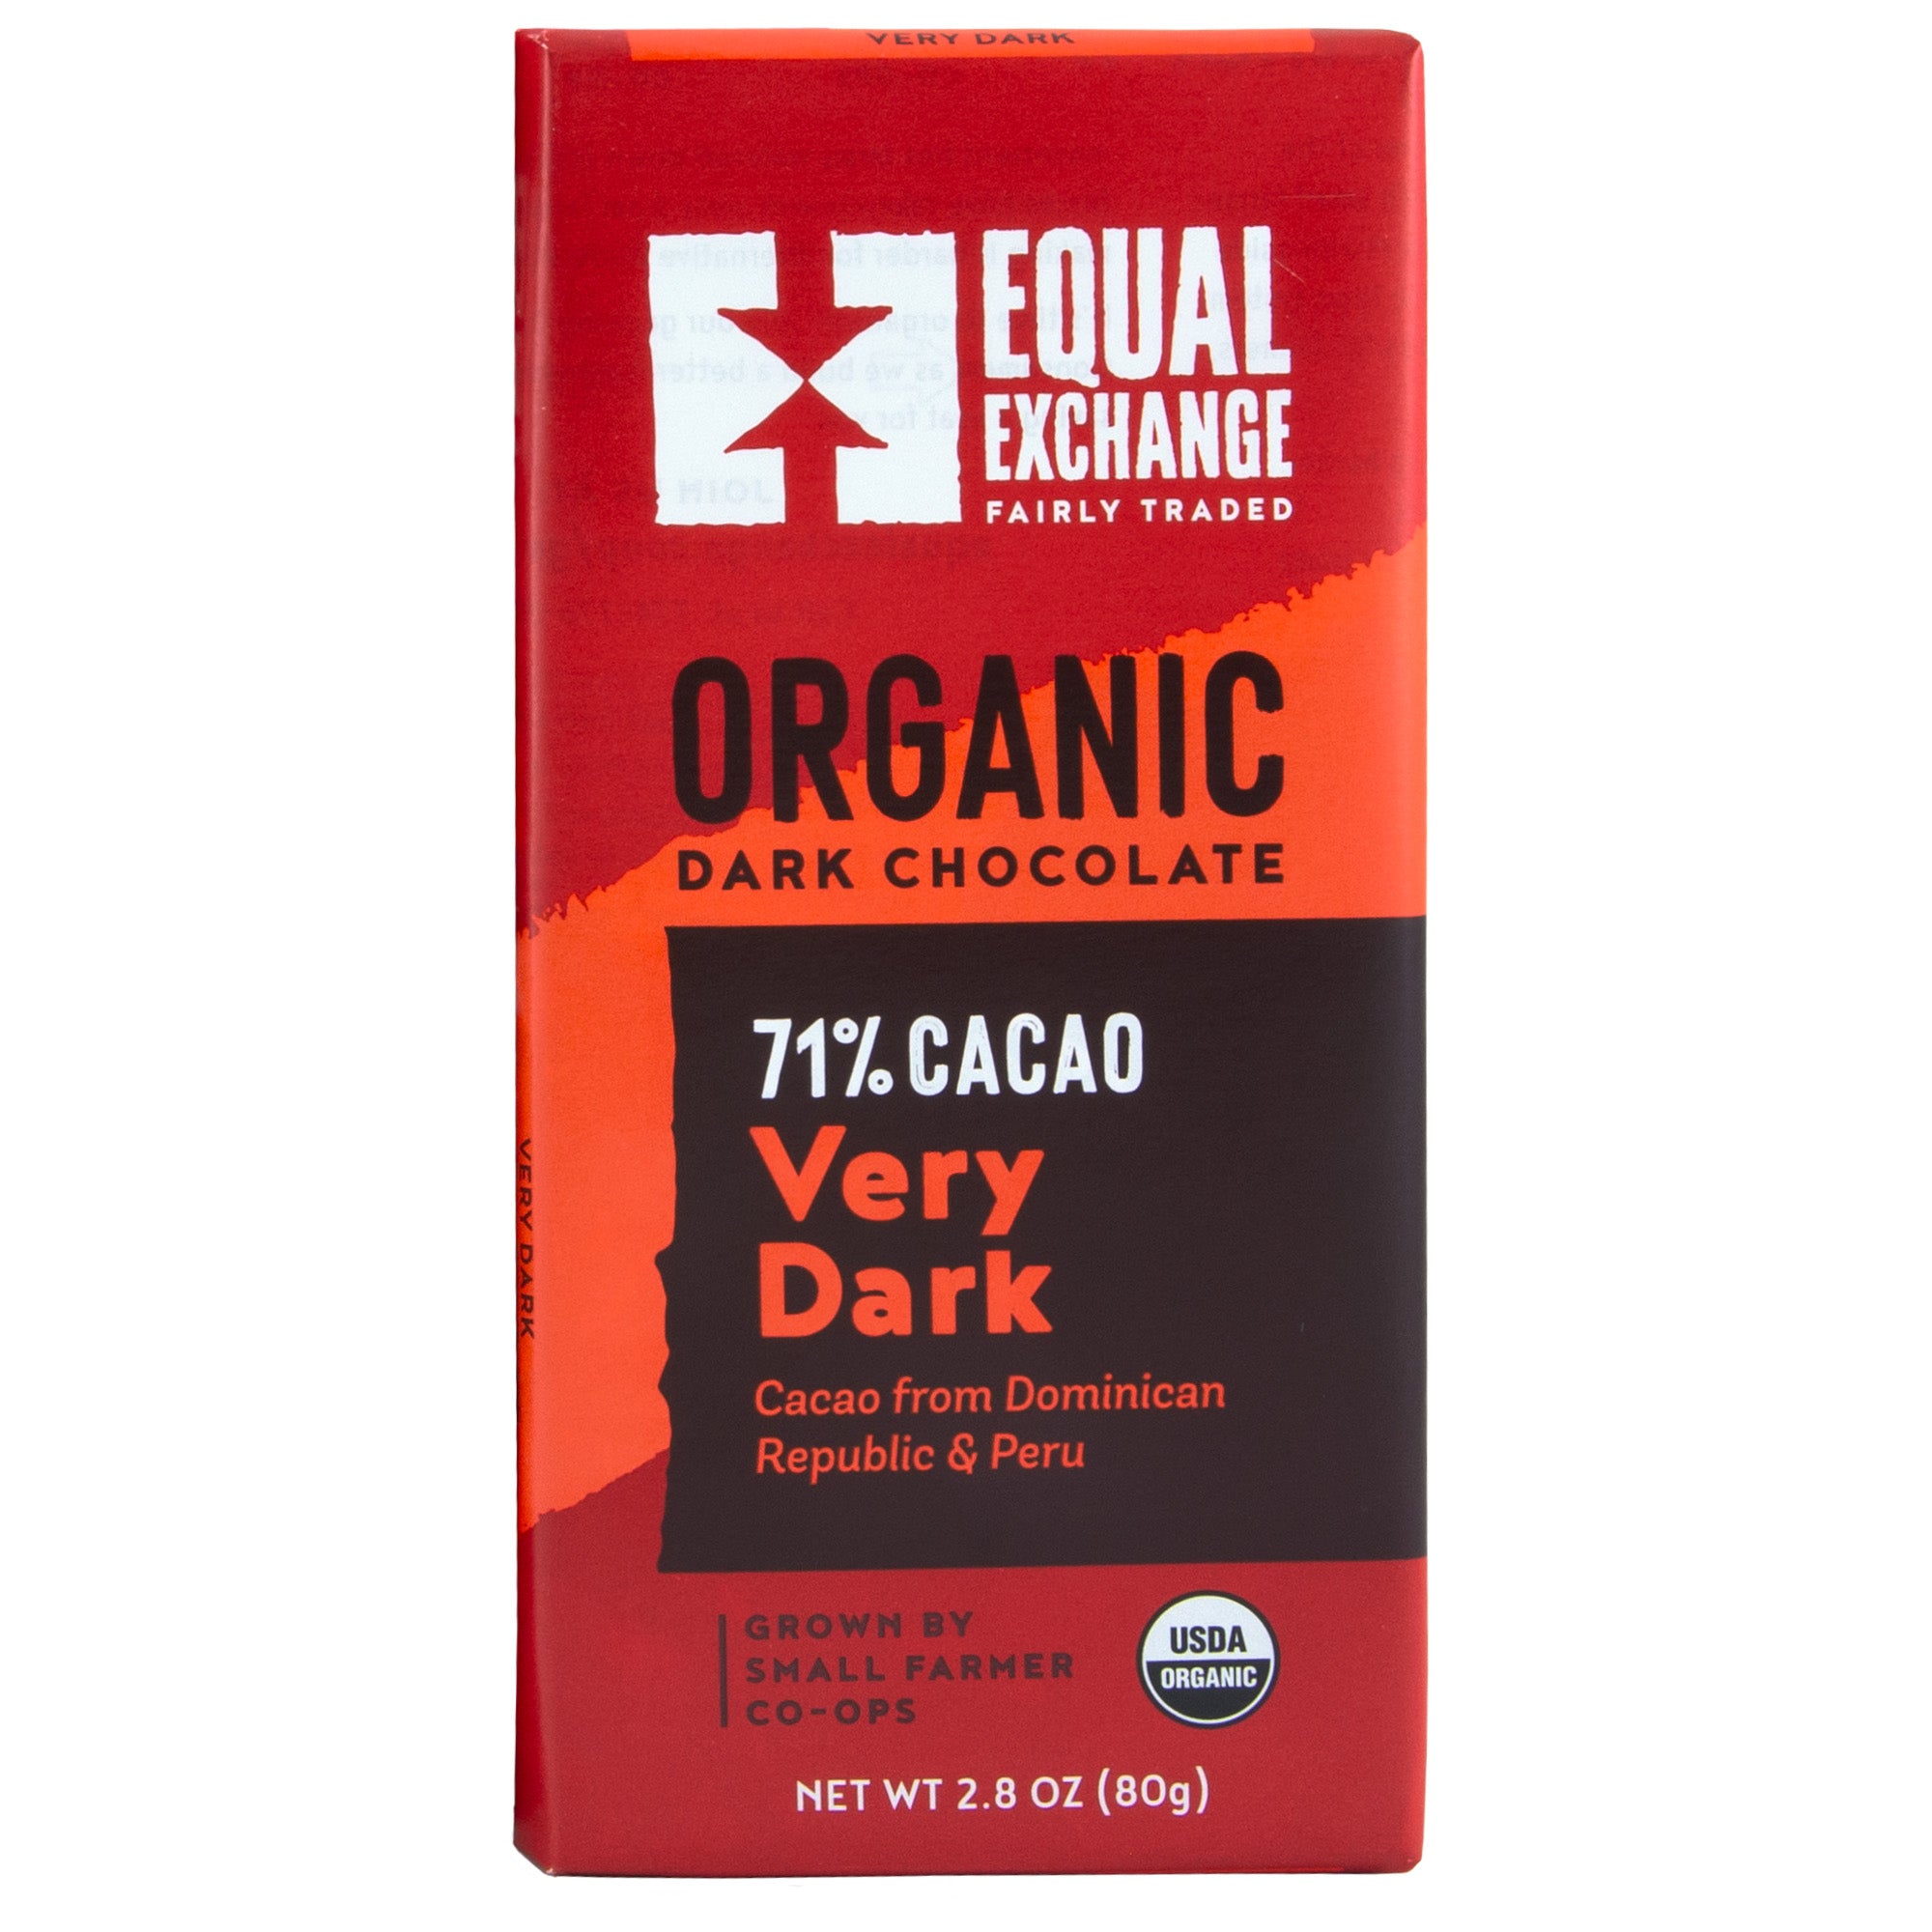 Very Dark Organic Chocolate - Equal Exchange - 2.8 oz